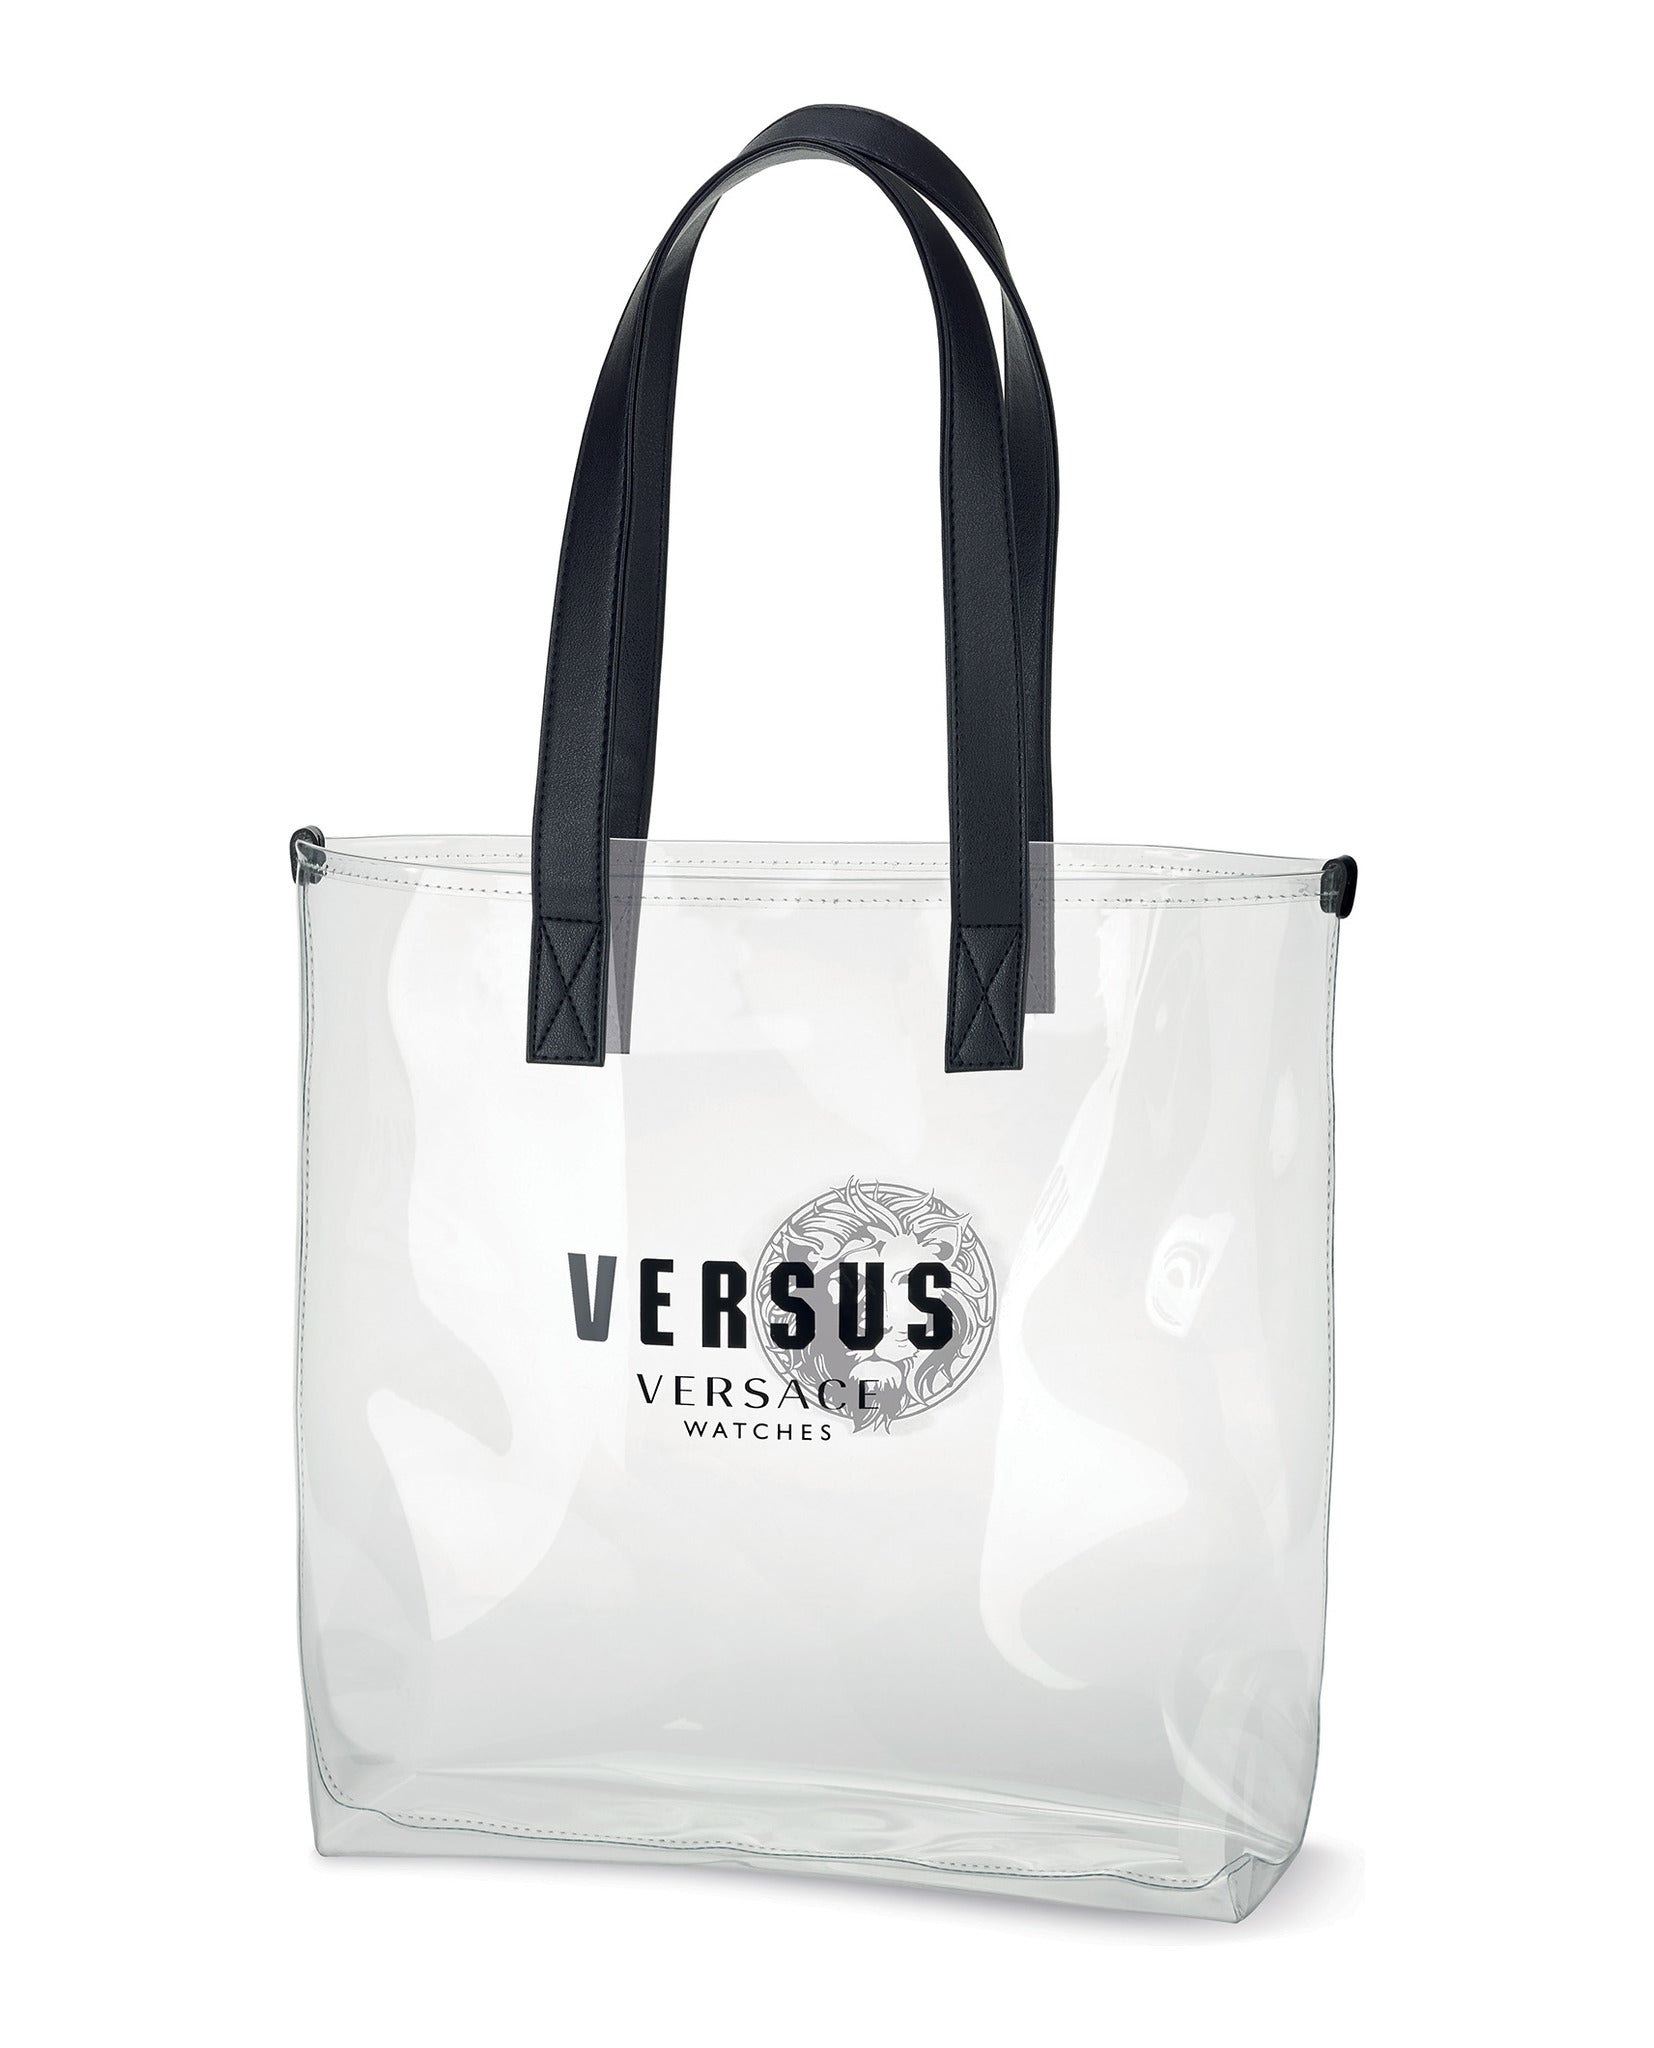 Versus Versace Tote Bag